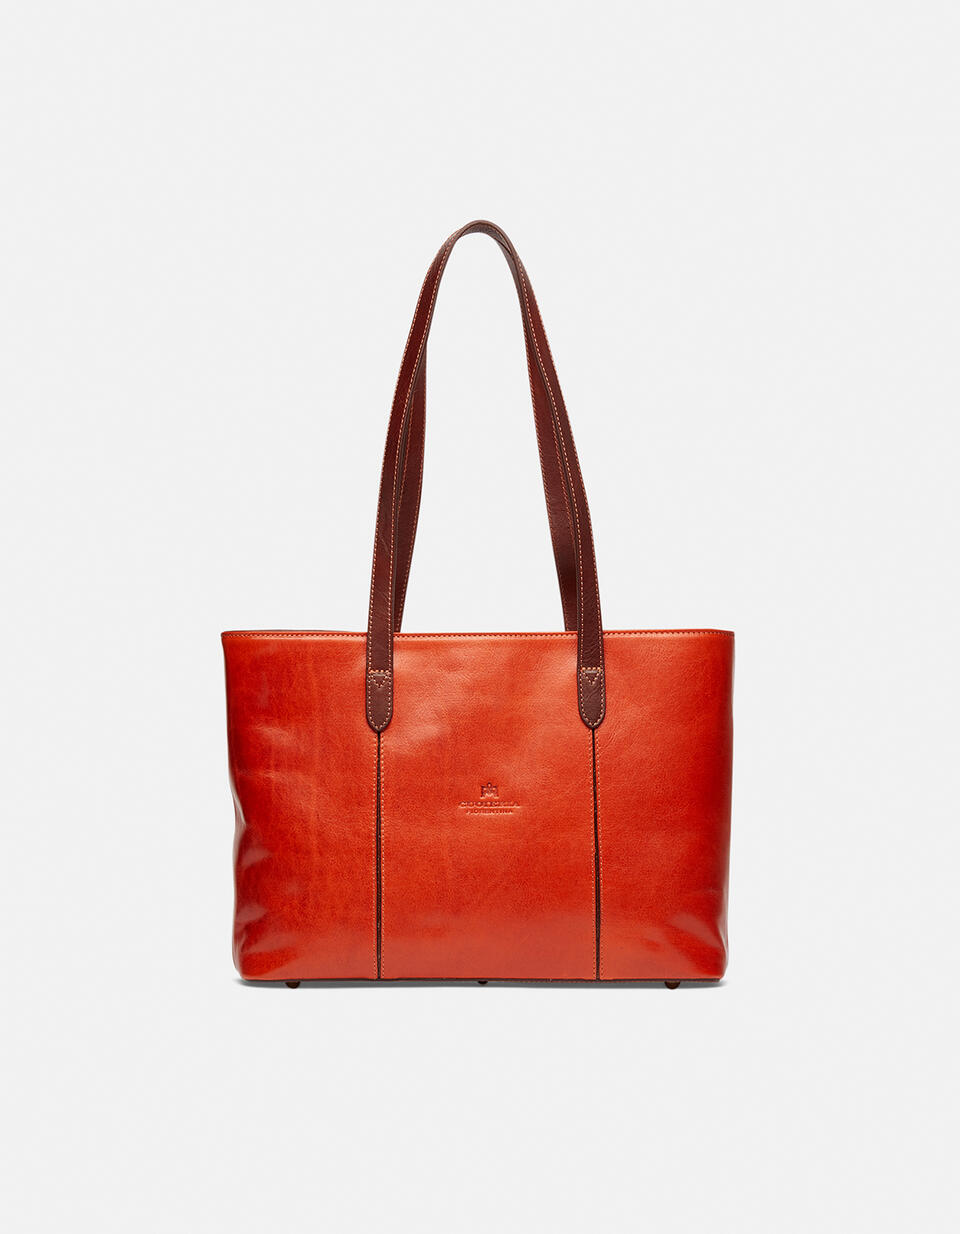 Large leather shopping bag - Women Bestseller | Bestseller ARANCIOBICOLORE - Women Bestseller | BestsellerCuoieria Fiorentina